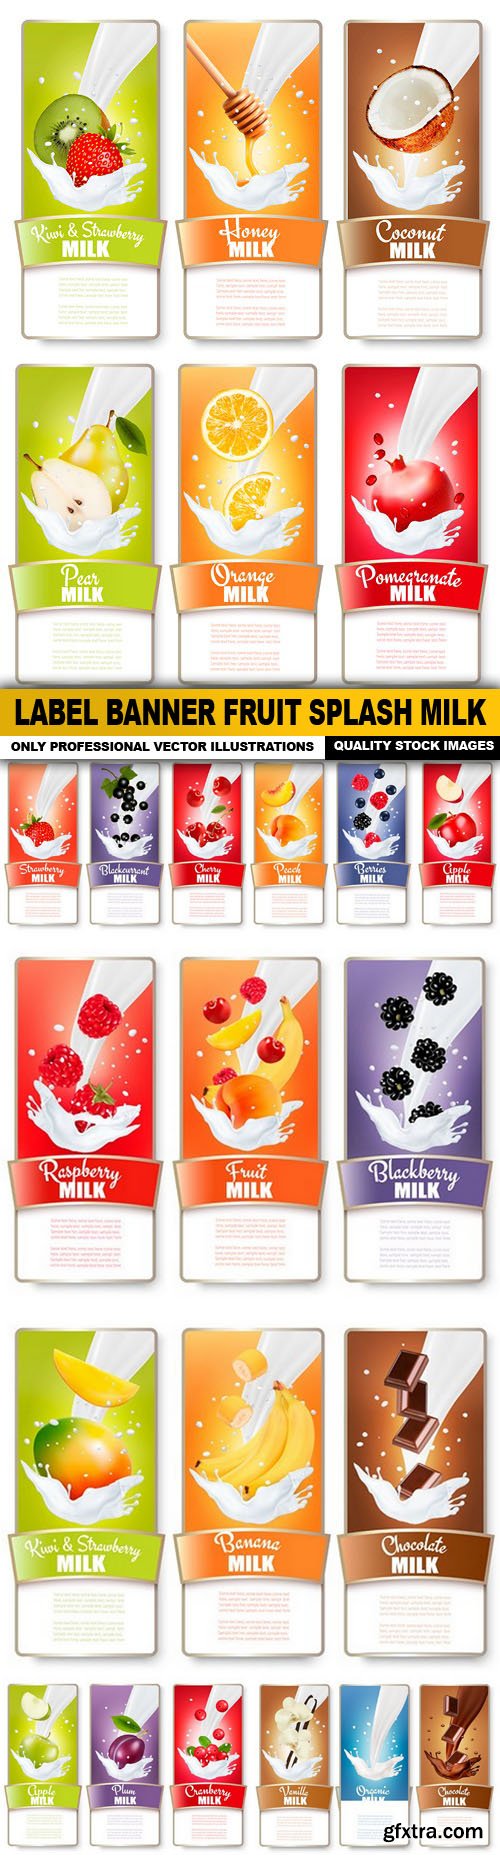 Label Banner Fruit Splash Milk - 8 Vector